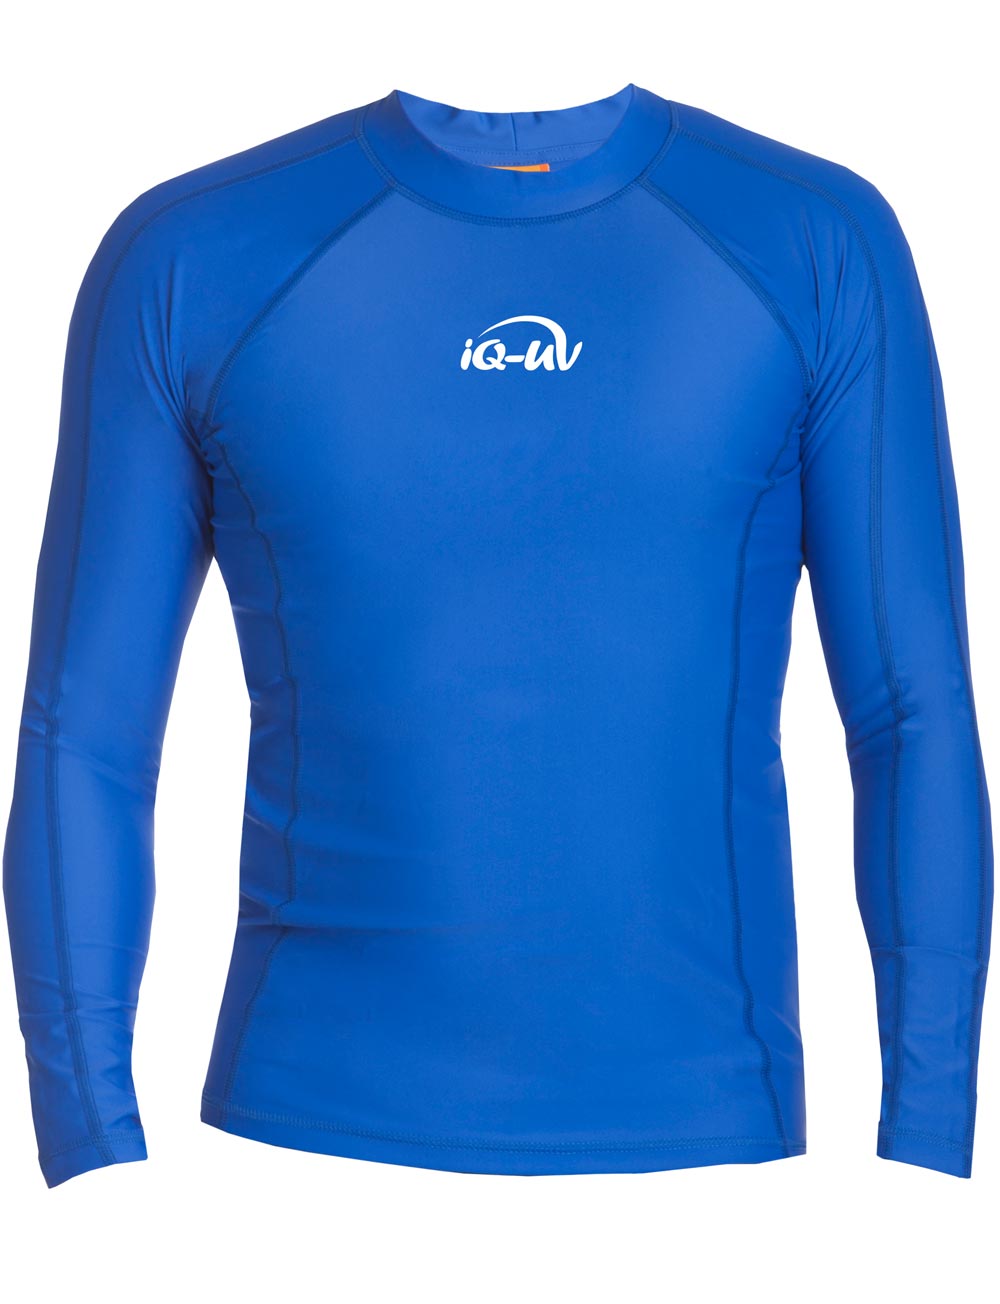 IQ UV 300 Shirt Slim Fit Watersport Longsleeve Men UV Shirt